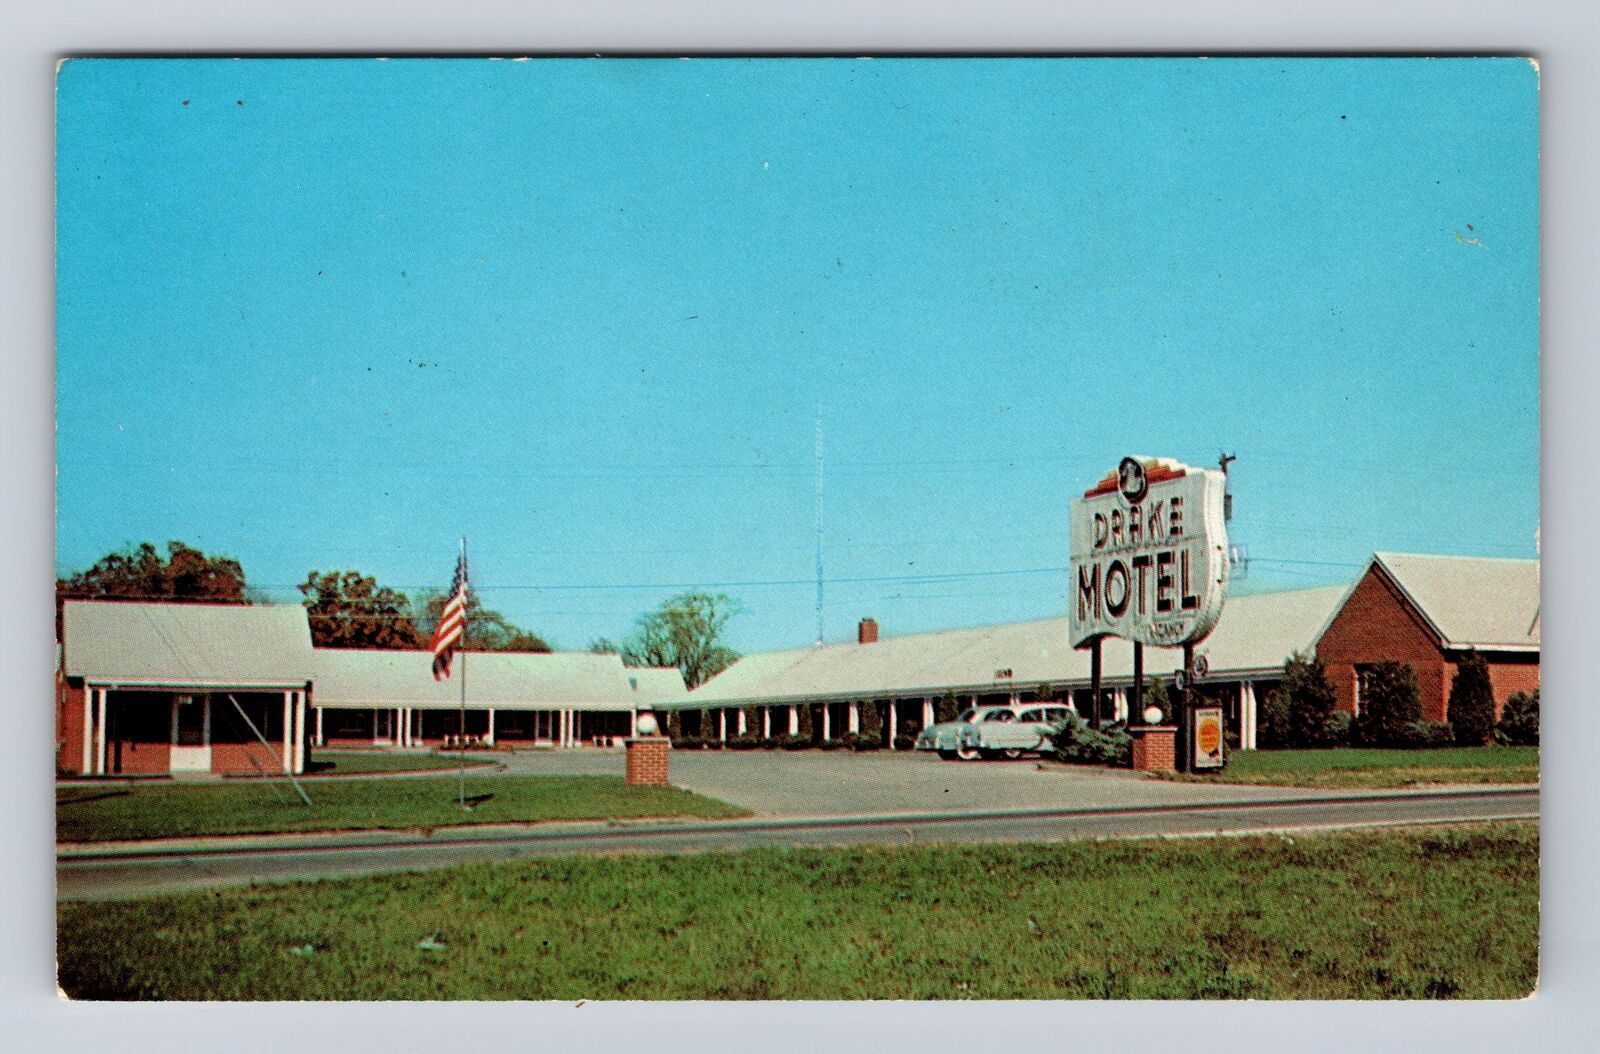 Springfield OH-Ohio, Drake Motel, Advertising, Vintage Postcard